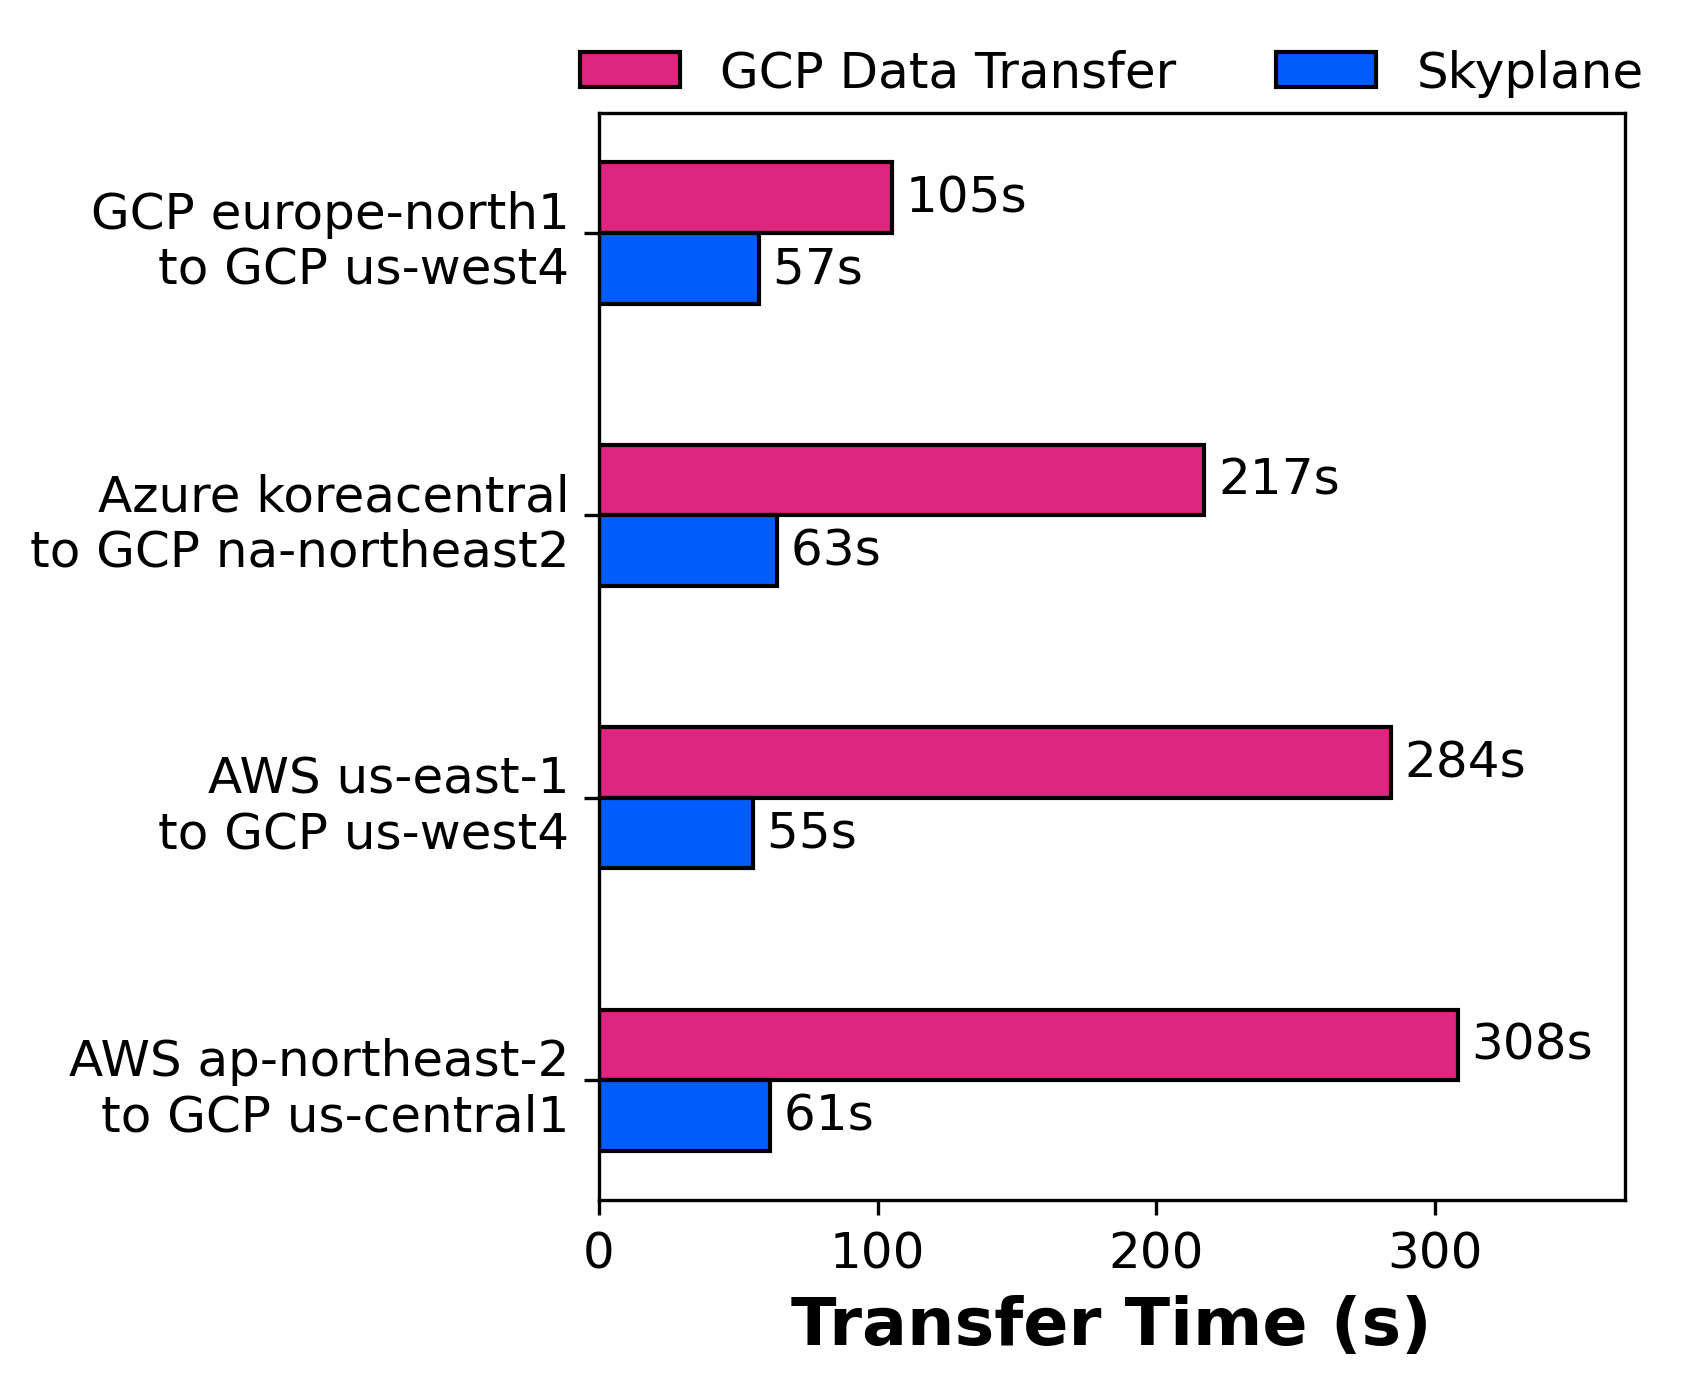 gcp_data_transfer